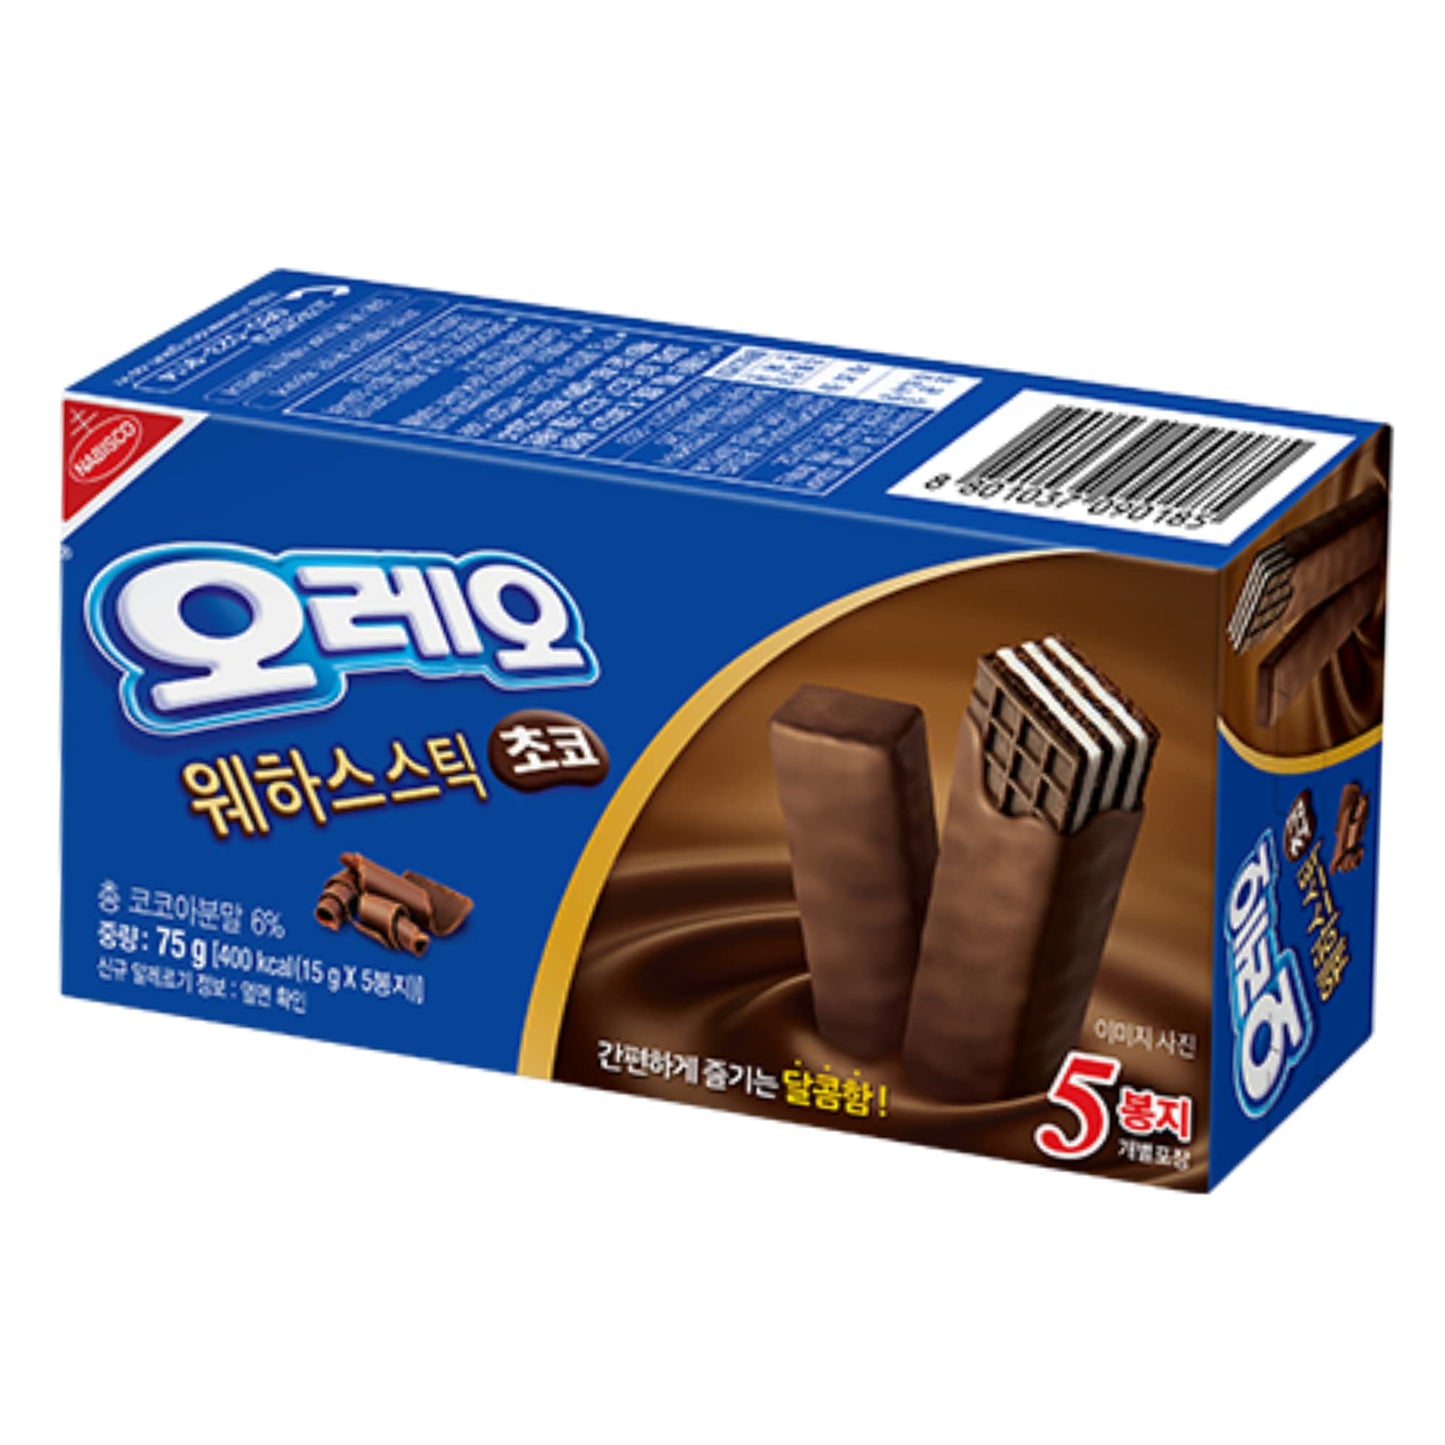 Oreo - Choco  - Choco Wafer Cookies (5 pack) - Korea Edition